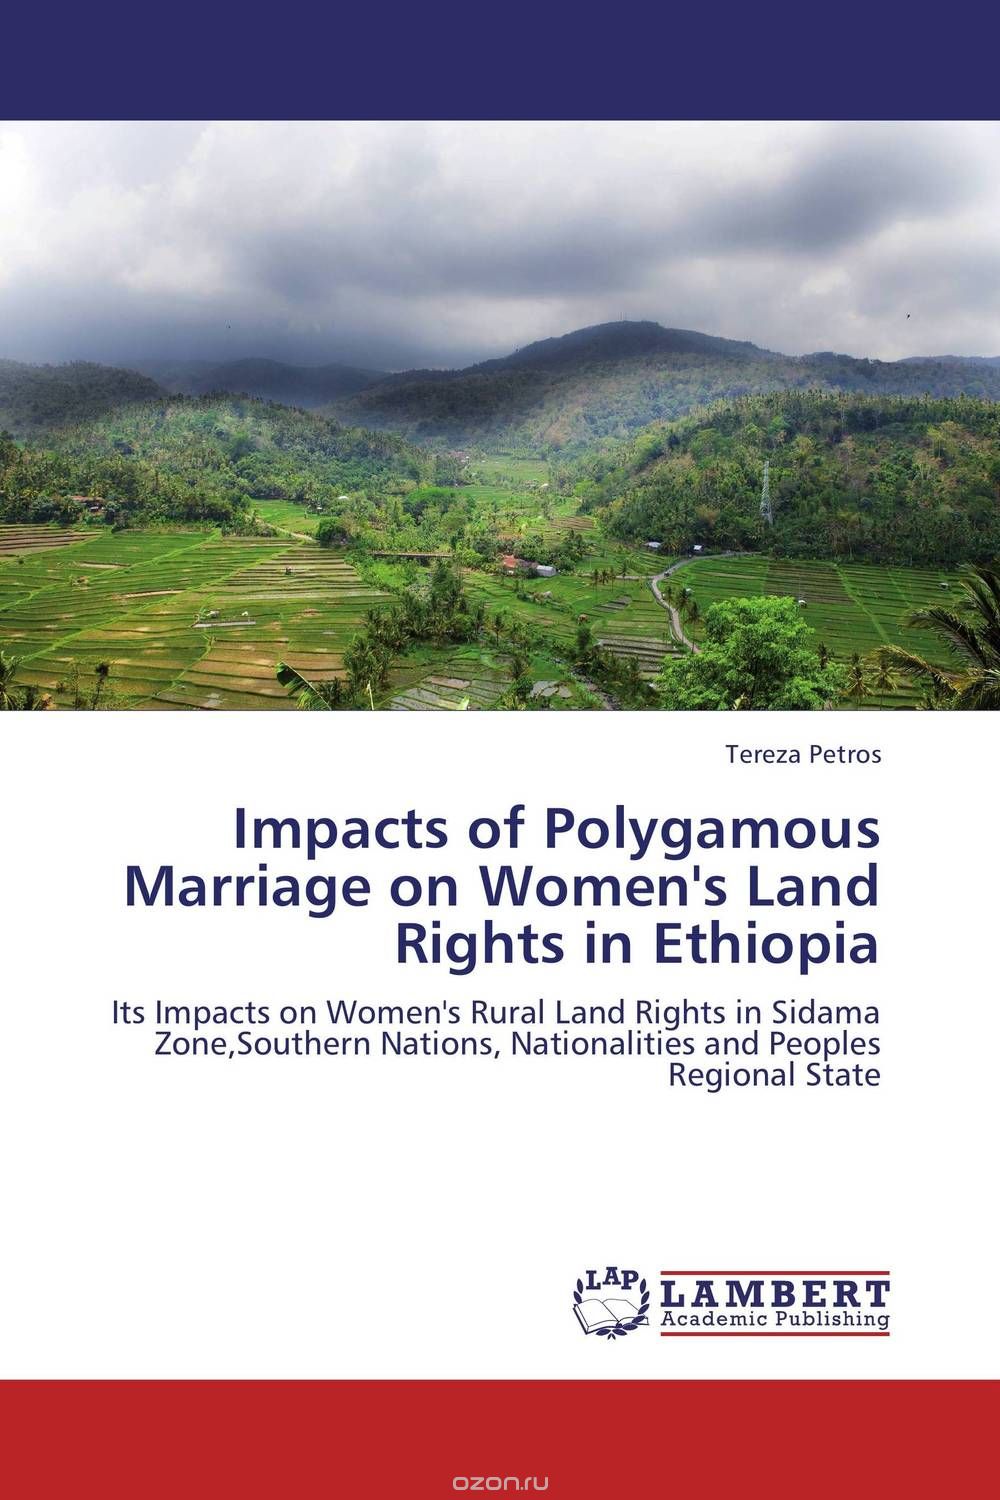 Скачать книгу "Impacts of Polygamous Marriage on Women's Land Rights in Ethiopia"